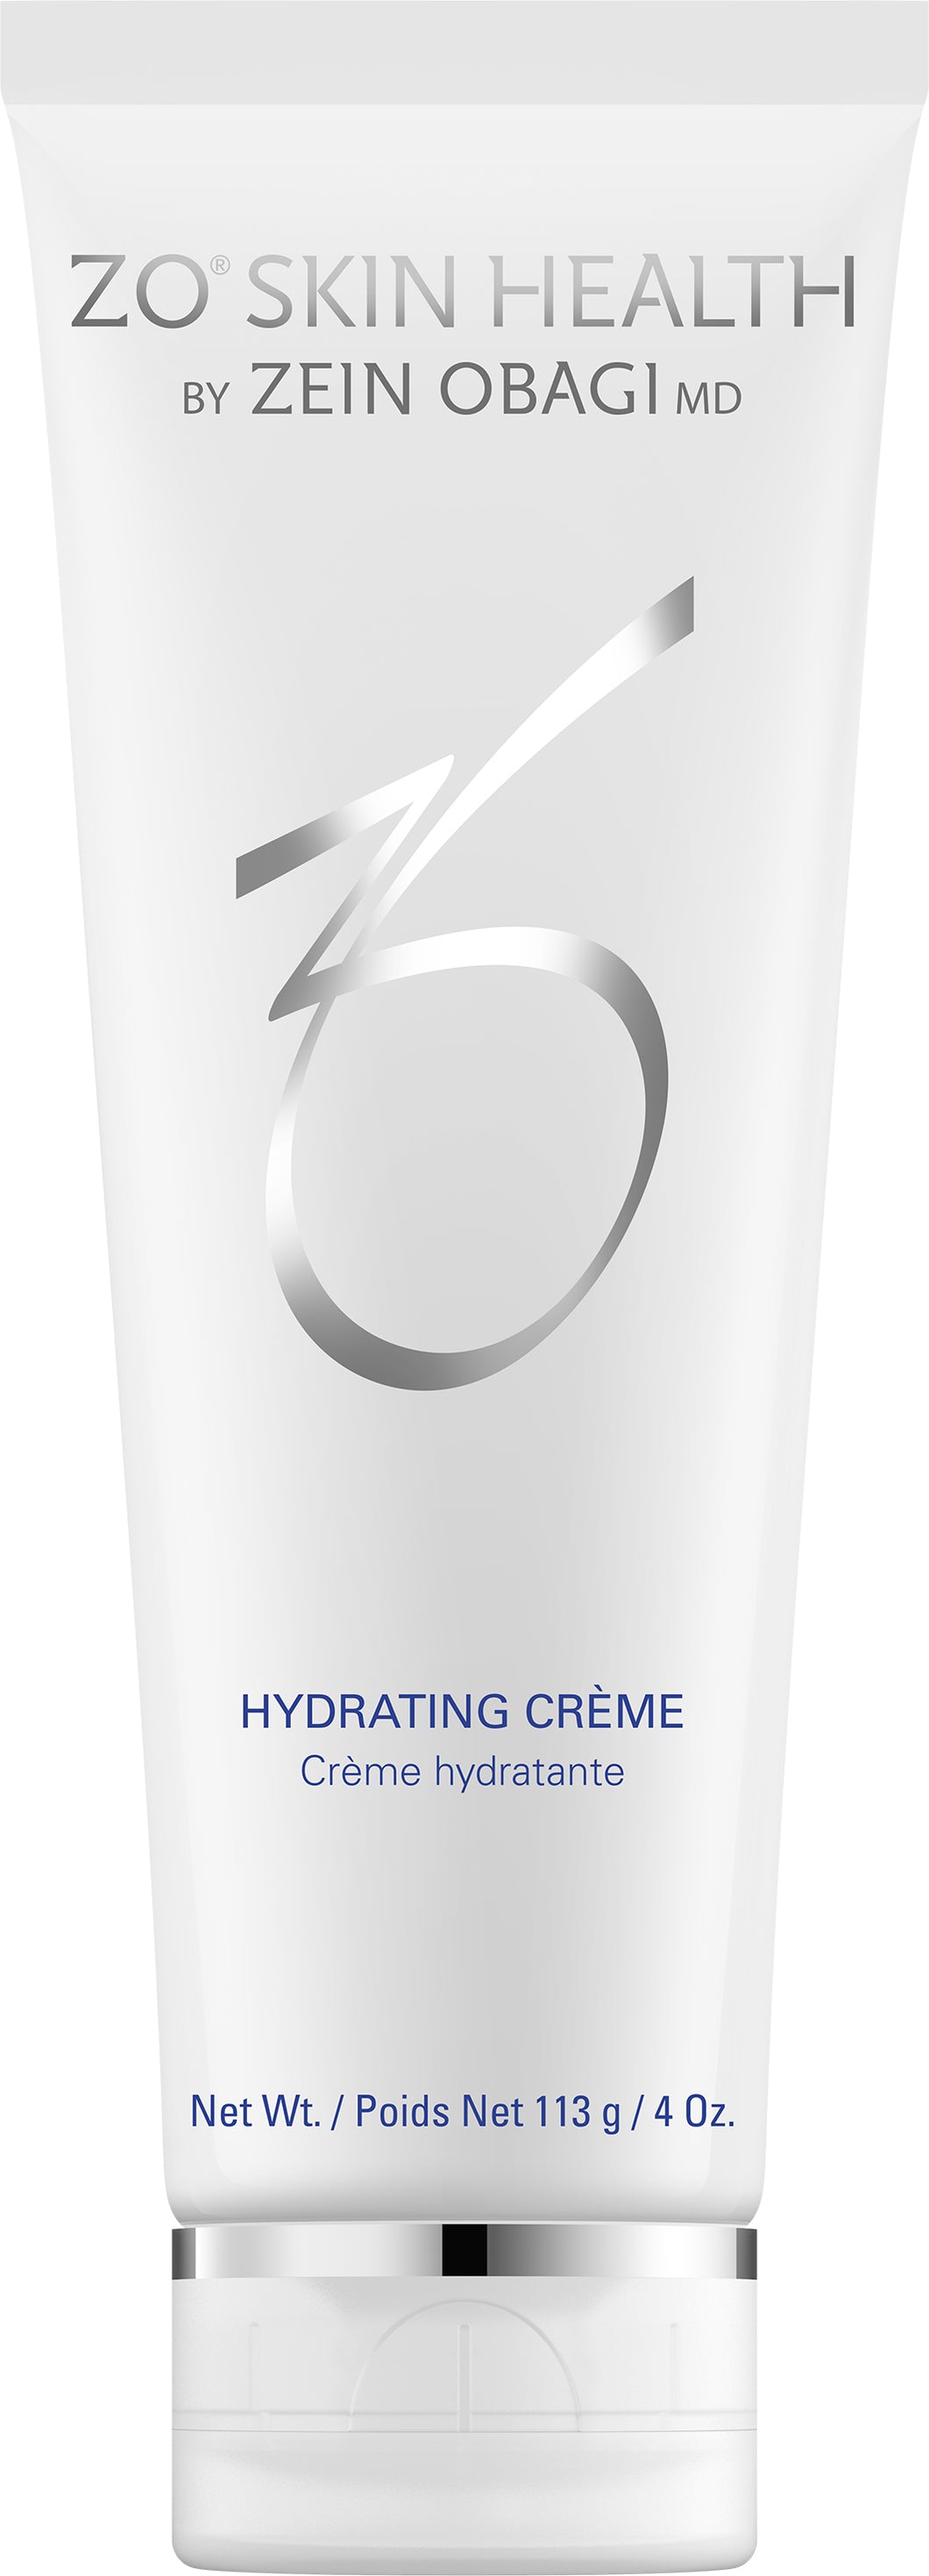 ZO SKIN HEALTH Hydrating Creme 113g - $190